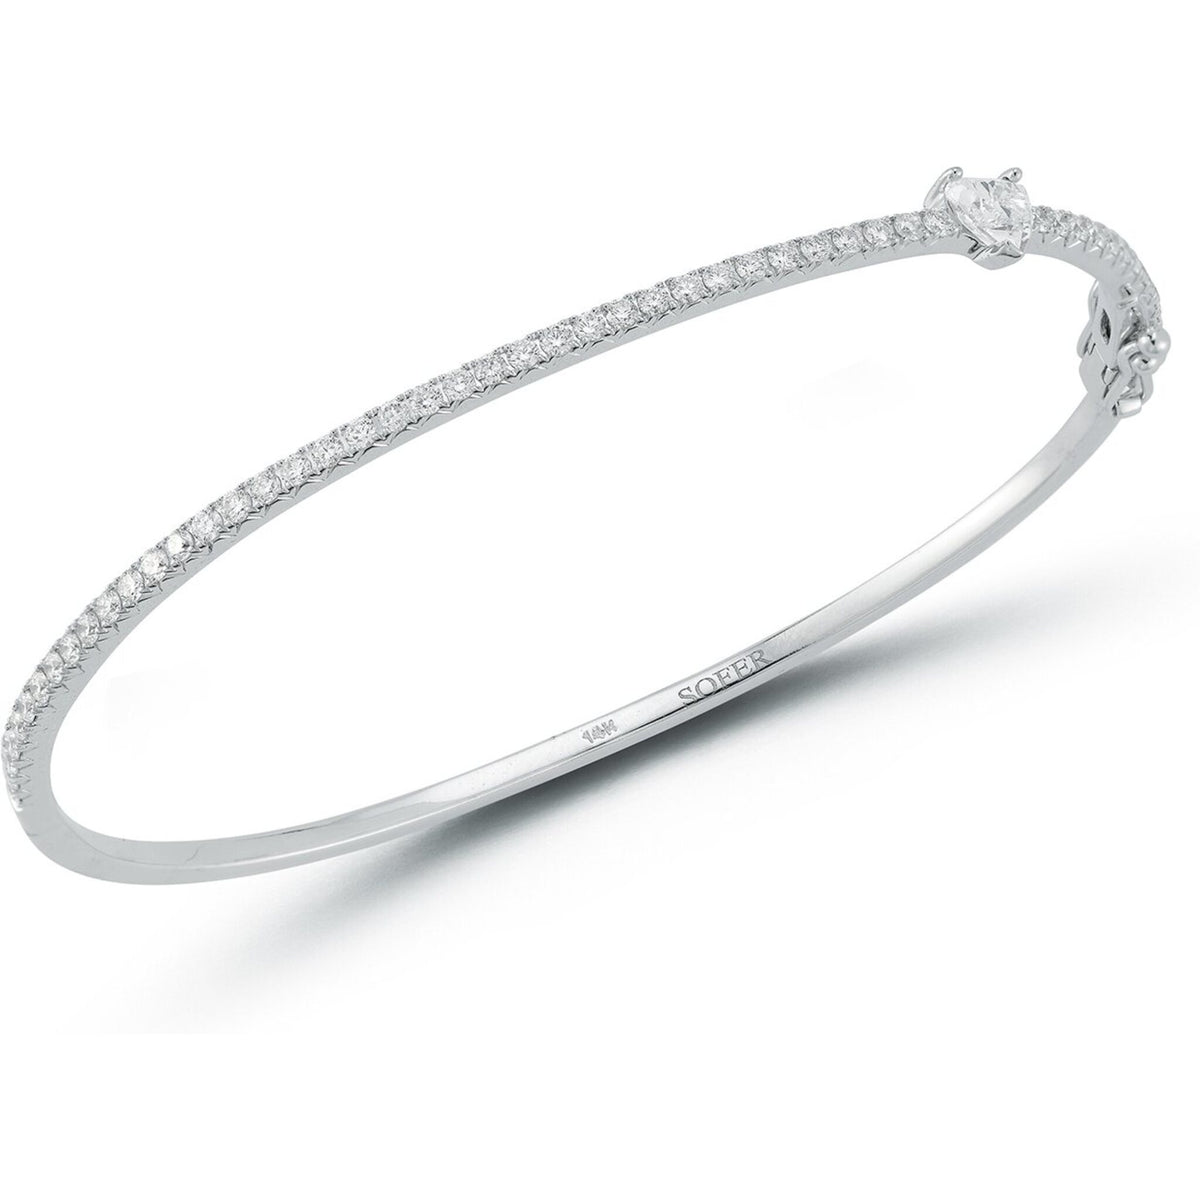 Cartier 100th Anniversary Diamond Star Trinity Bangle Bracelet by Cartier